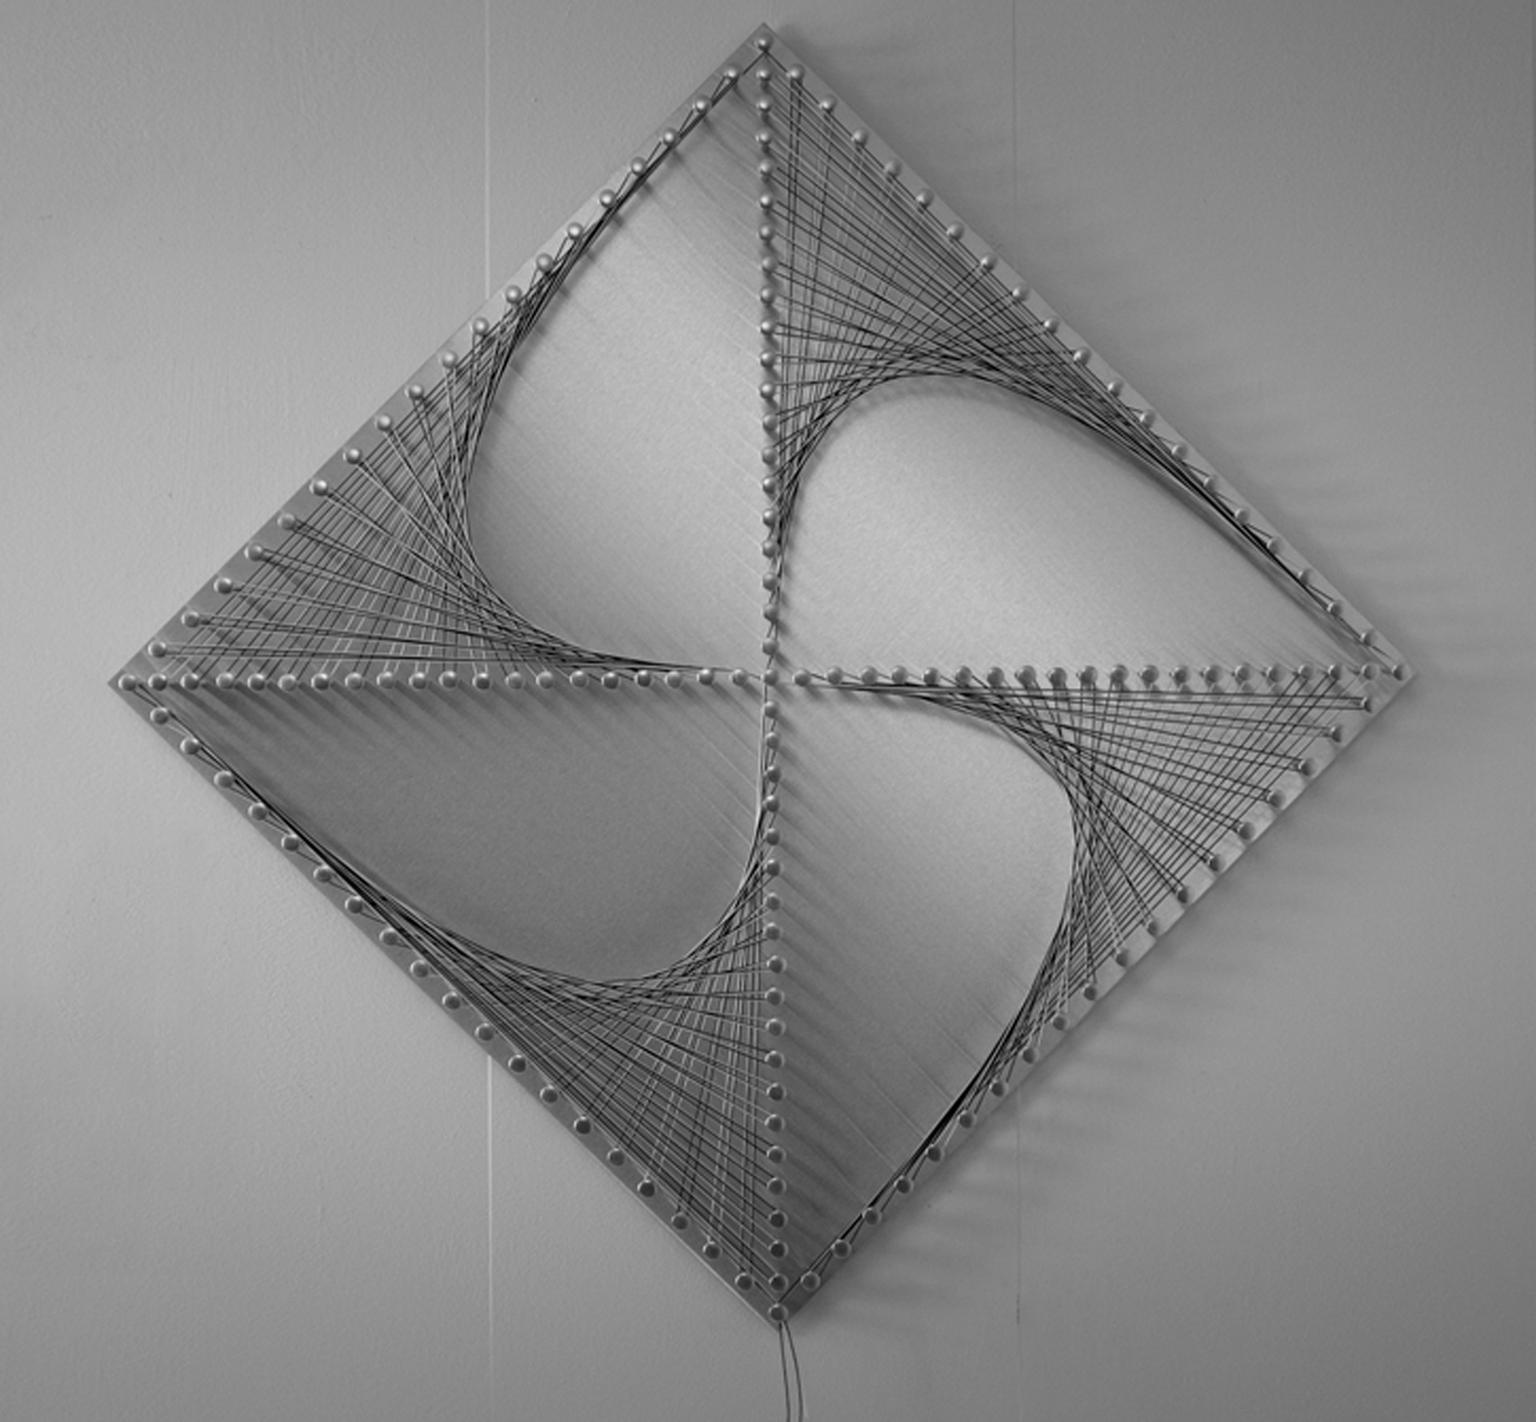 Image for entry 'Impossible Curve Sculpture - JMM:2013'